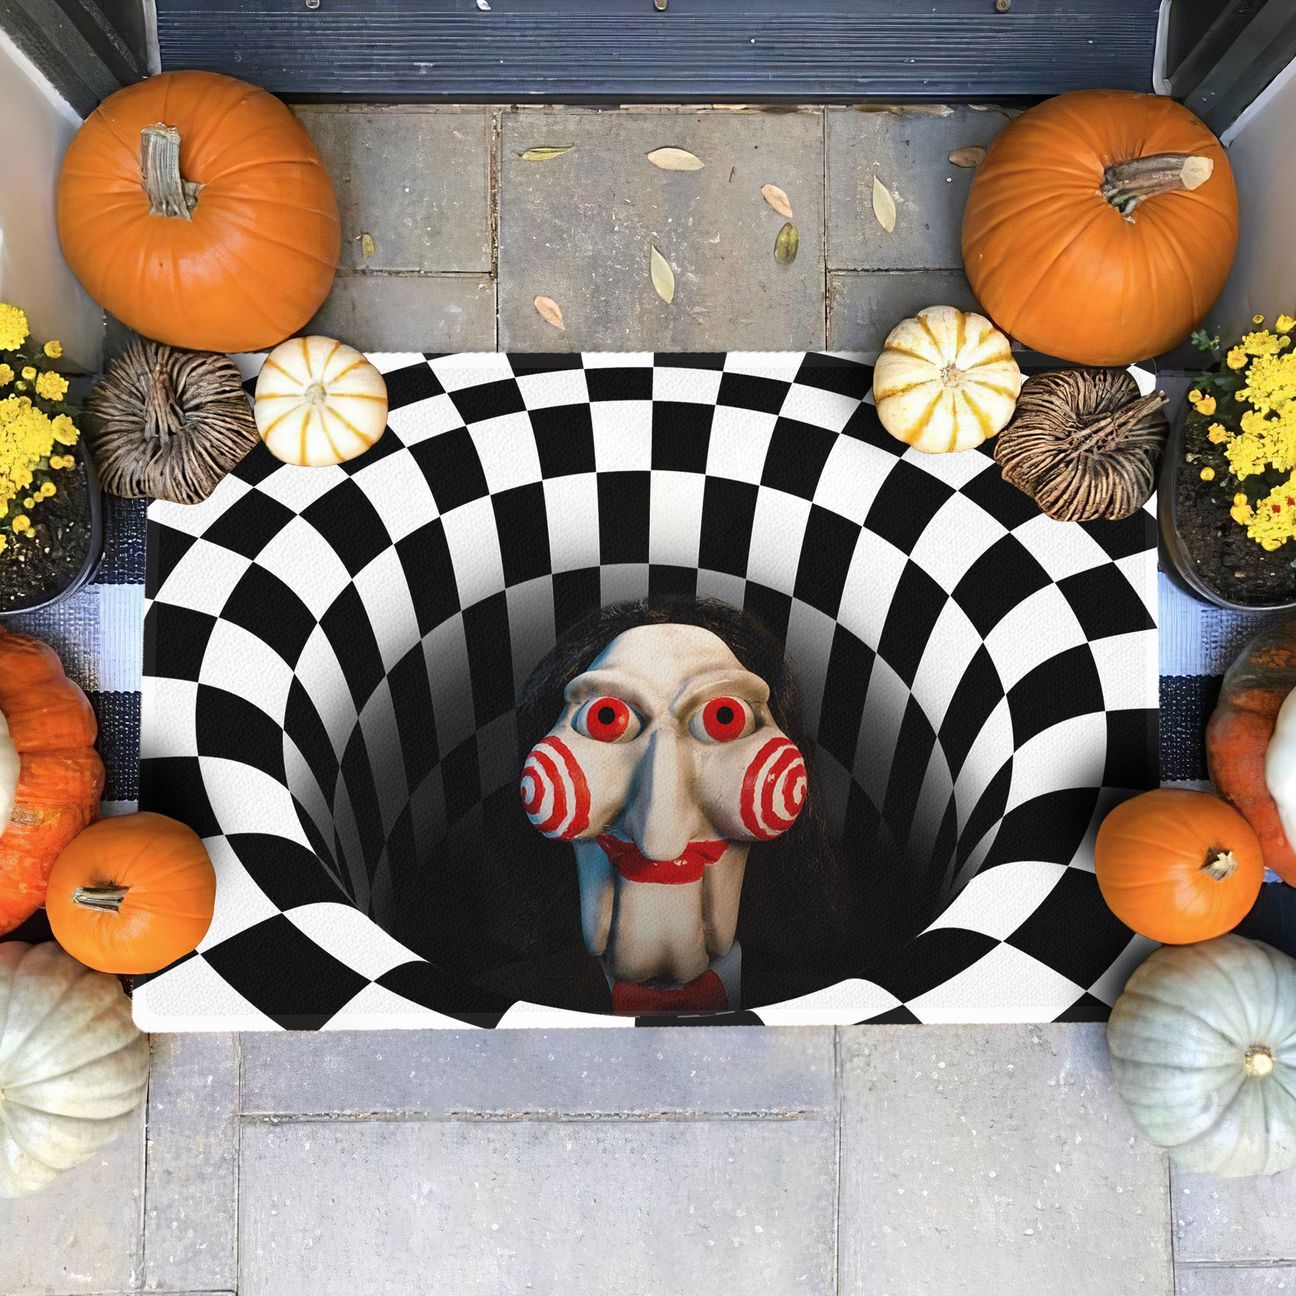 Billy jigsaw illusion halloween doormat-2